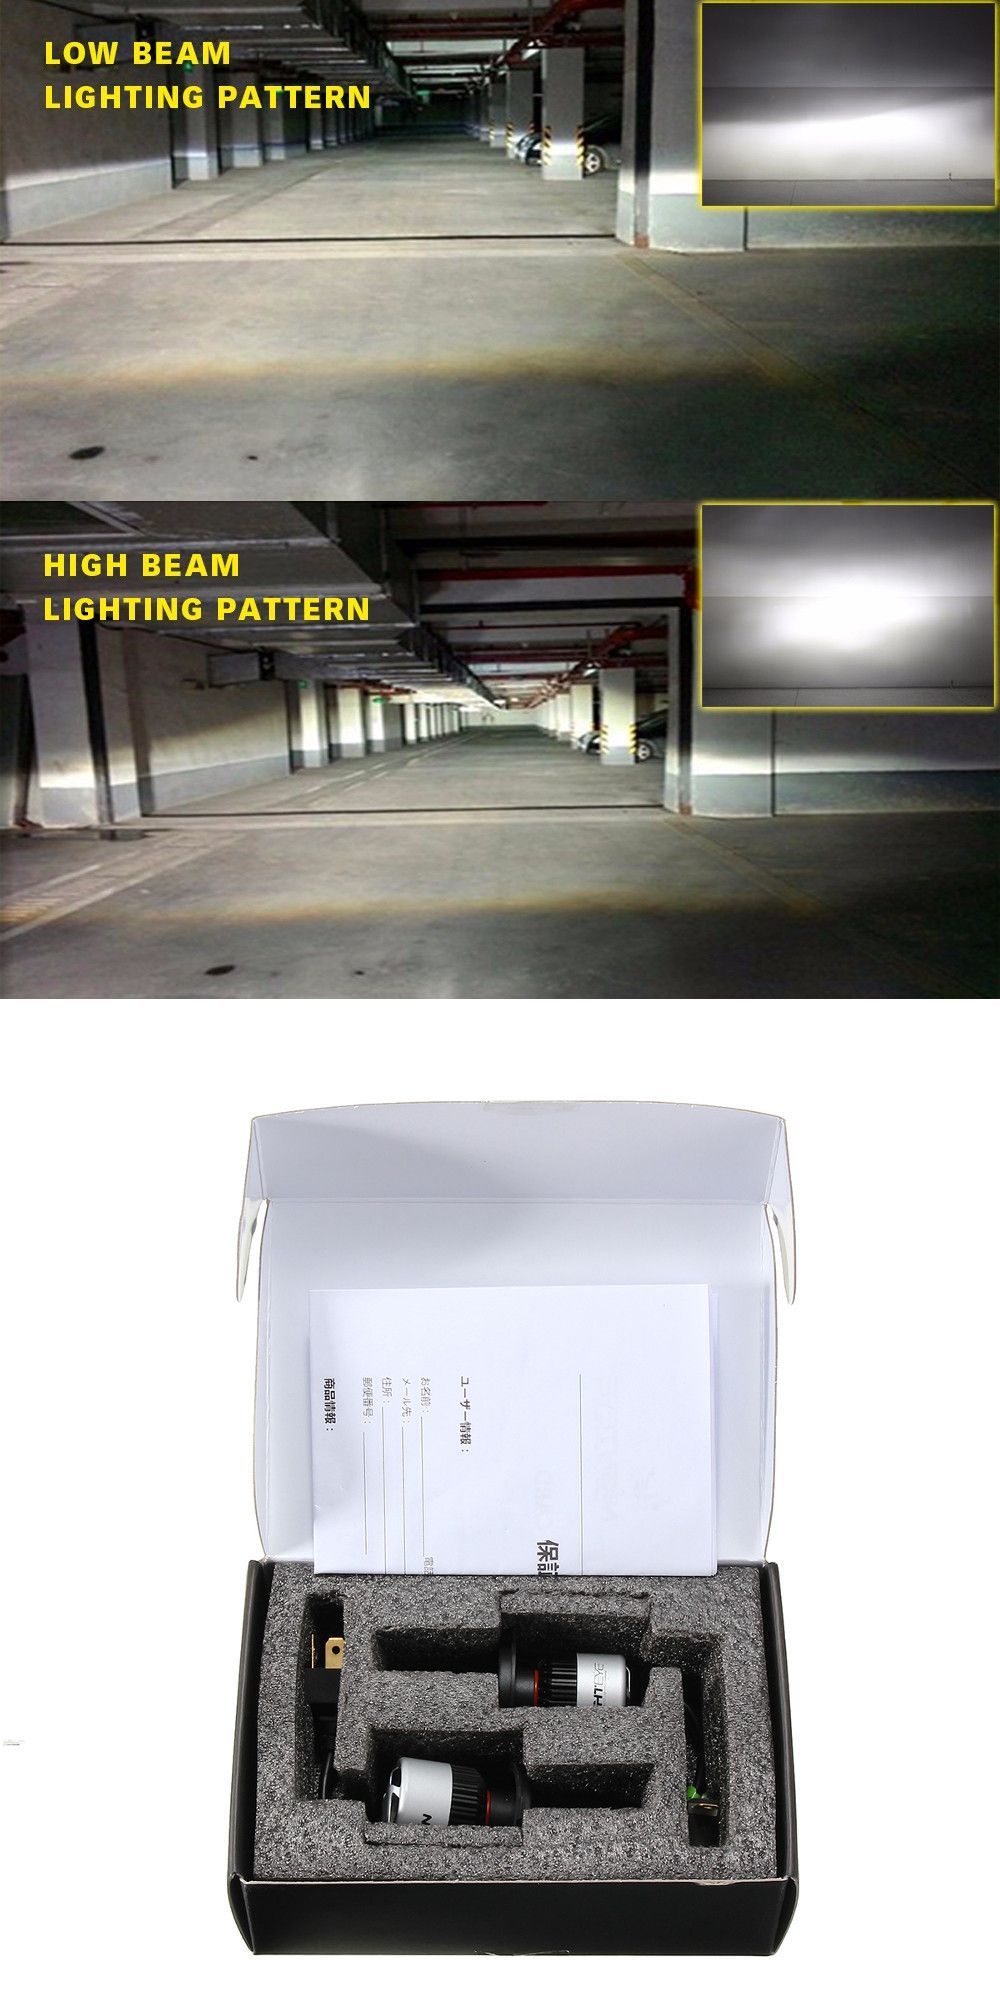 NightEye-S2-COB-LED-Car-Headlights-Bulbs-Fog-Light-H1-H4-H7-H11-9005-9006-72W-9000LM-6500K-White-2Pc-1103025